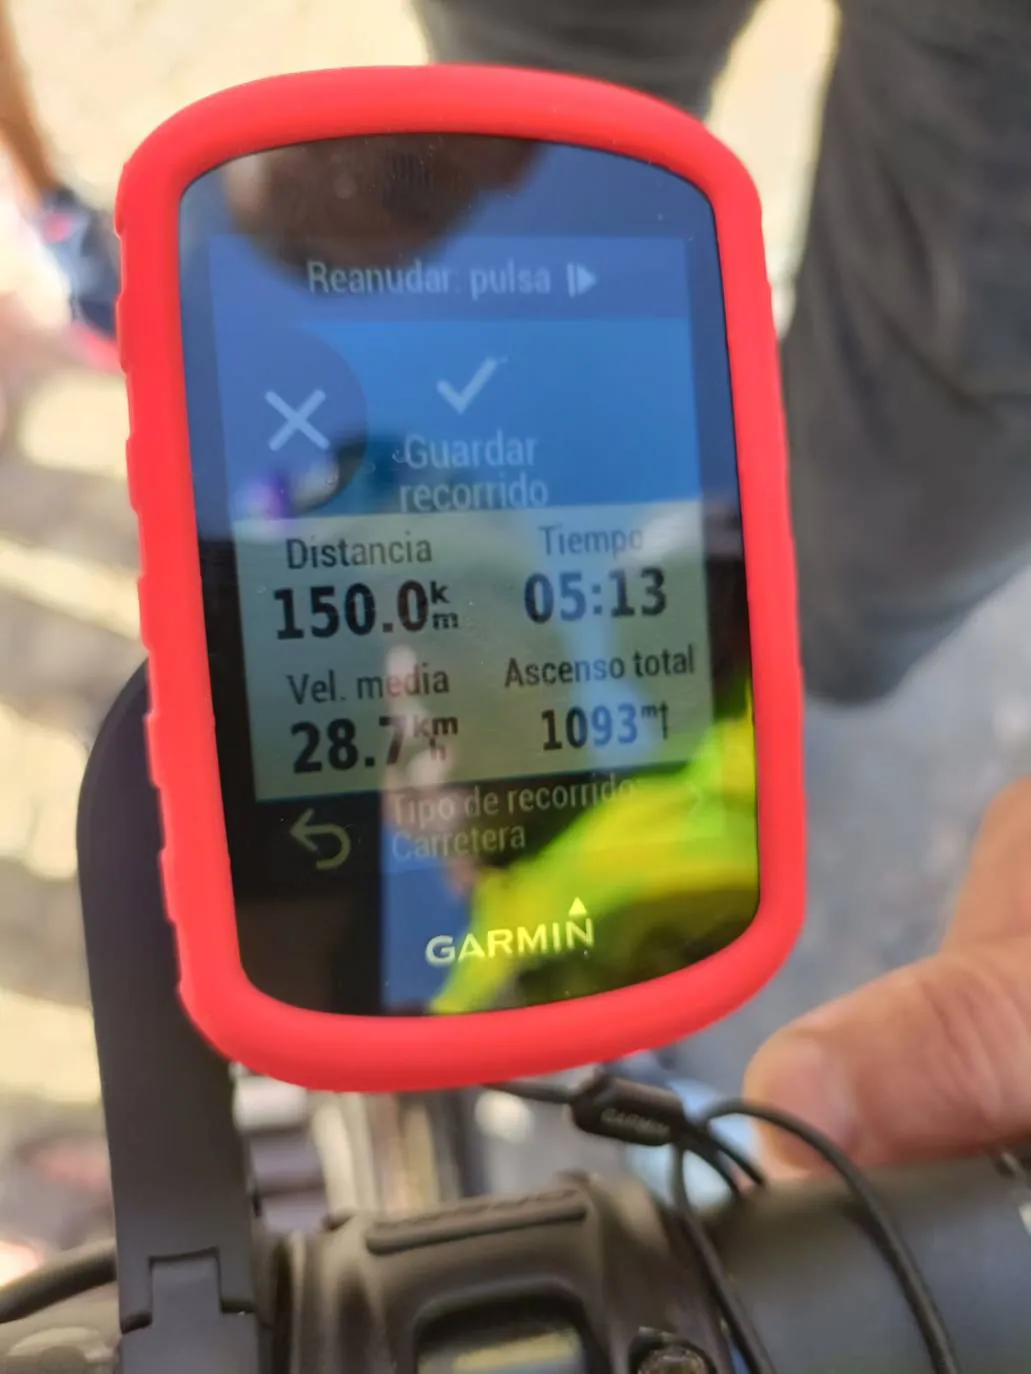 Imagen secundaria 2 - Raúl Rasero recorrió en bicicleta 150 kilómetros a beneficio de la ADMO